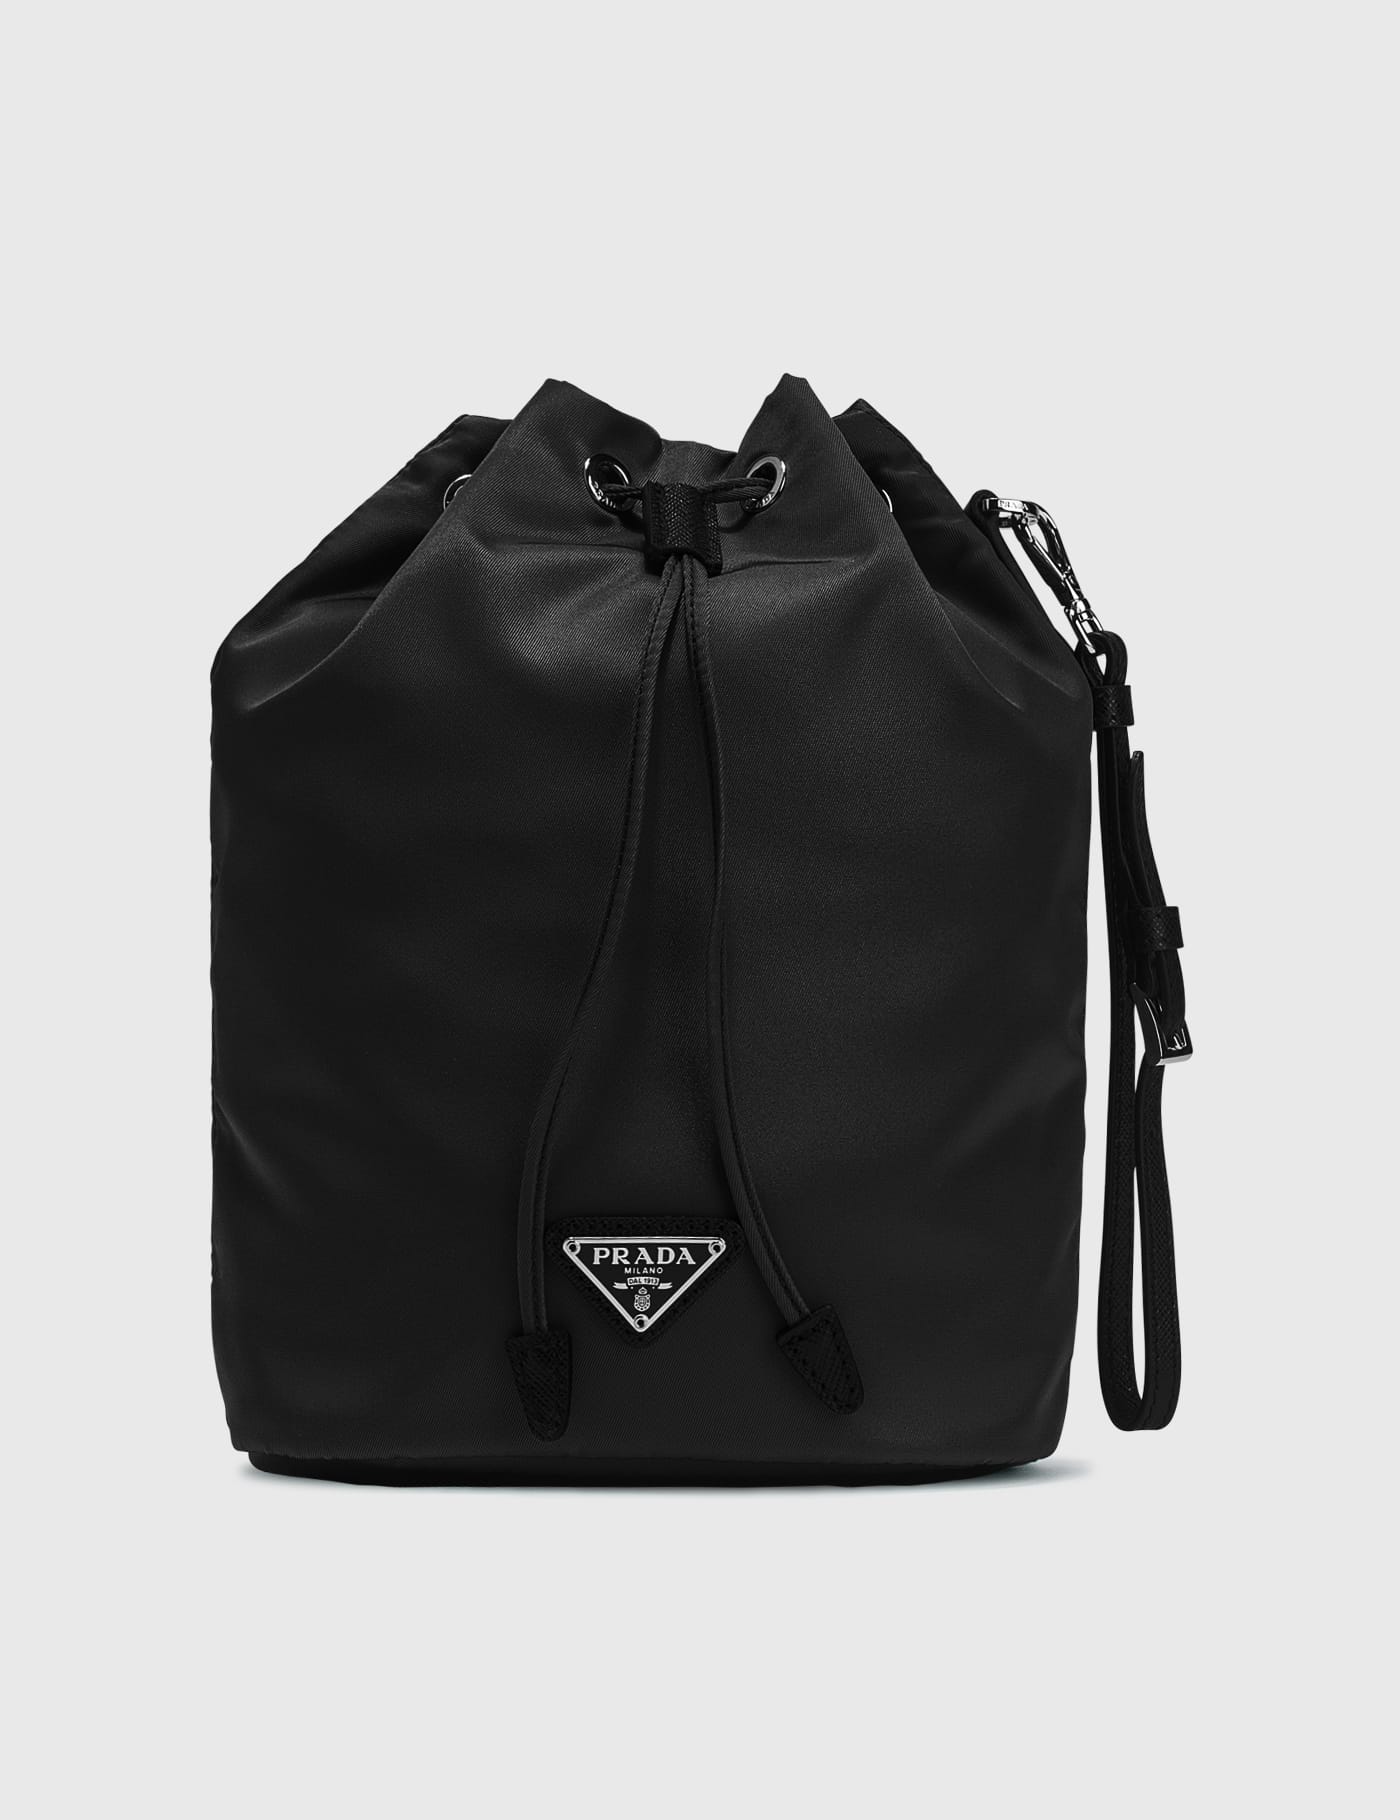 prada drawstring bag with strap